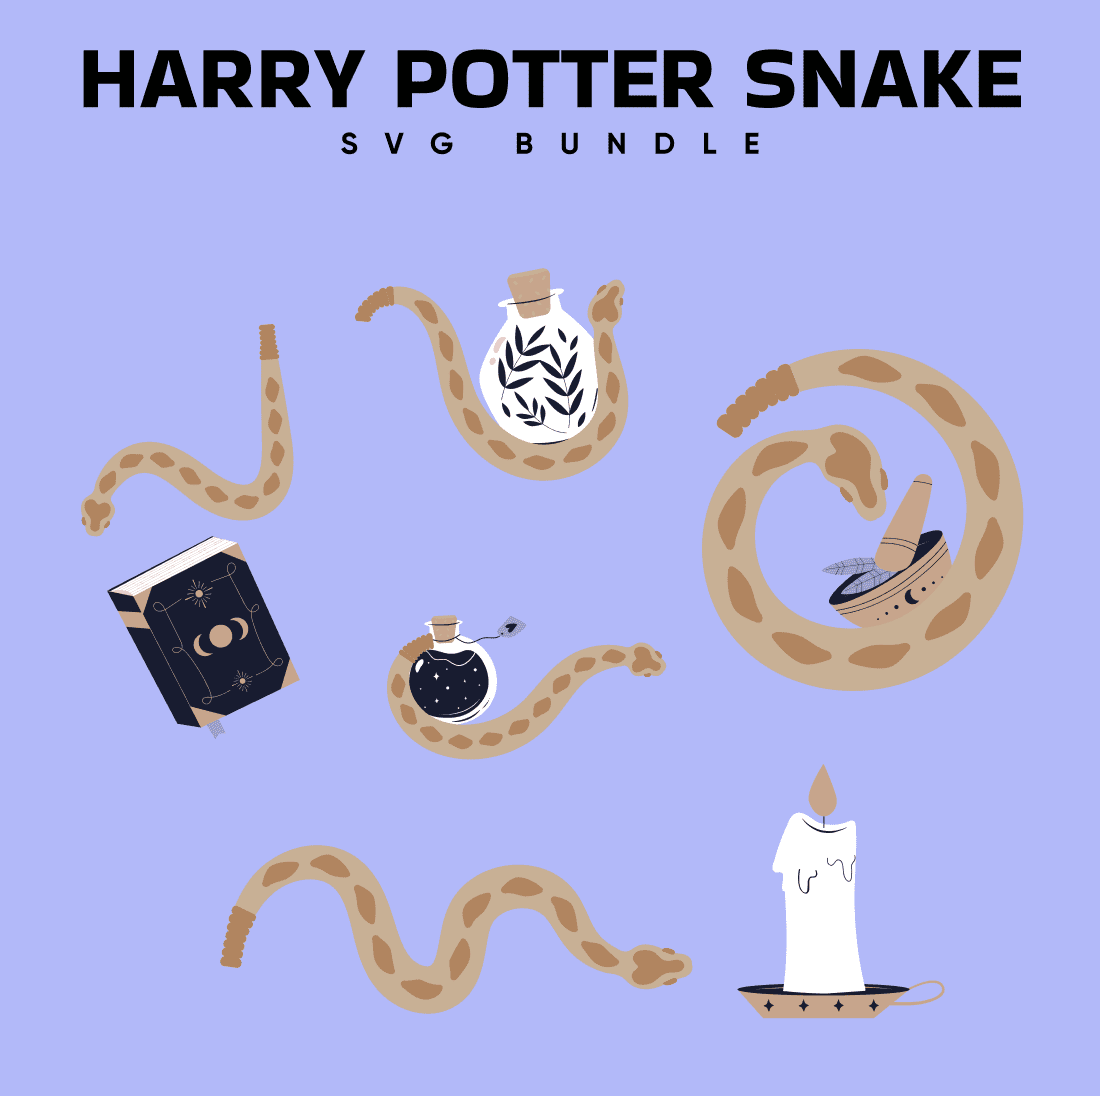 Harry Potter snake SVG bundle, main picture 1100x1100.